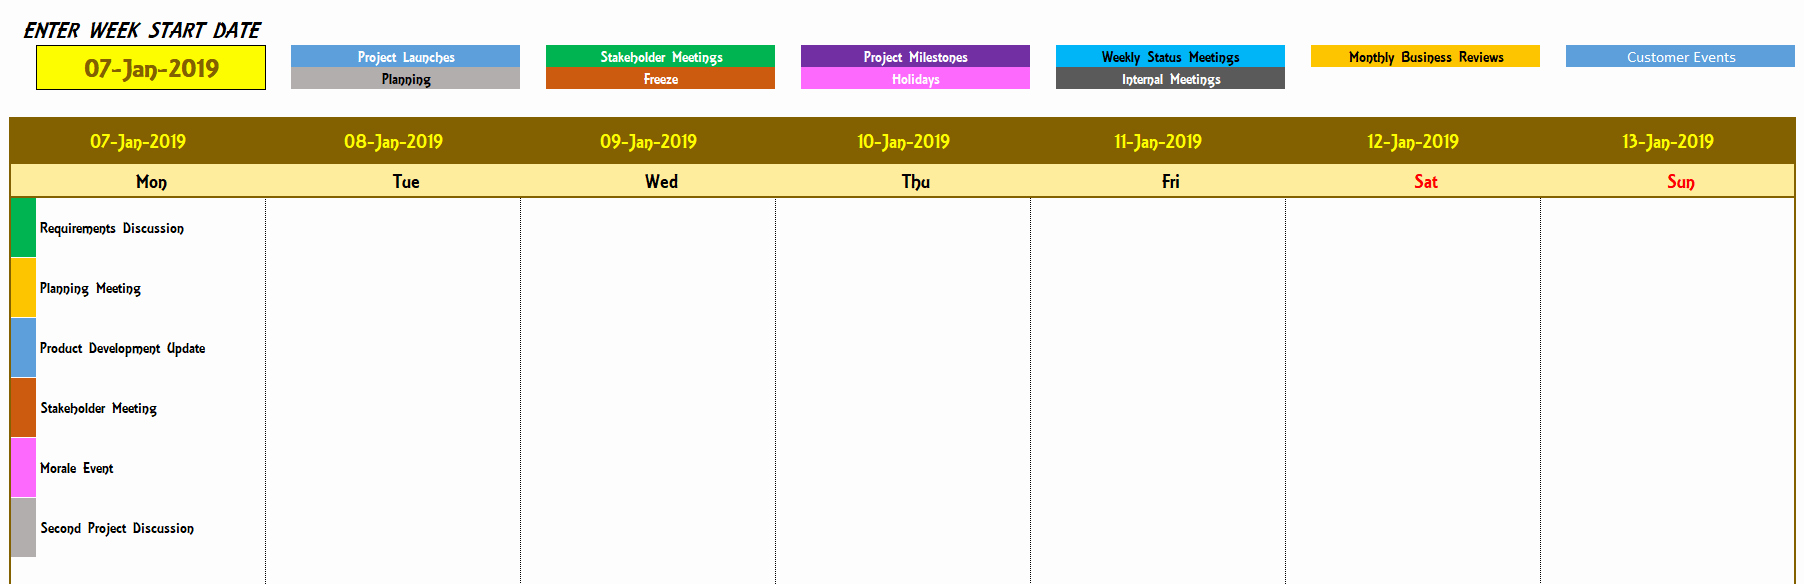 Excel Calendar 2019 Template Fresh Excel Calendar Template Excel Calendar 2019 2020 or Any